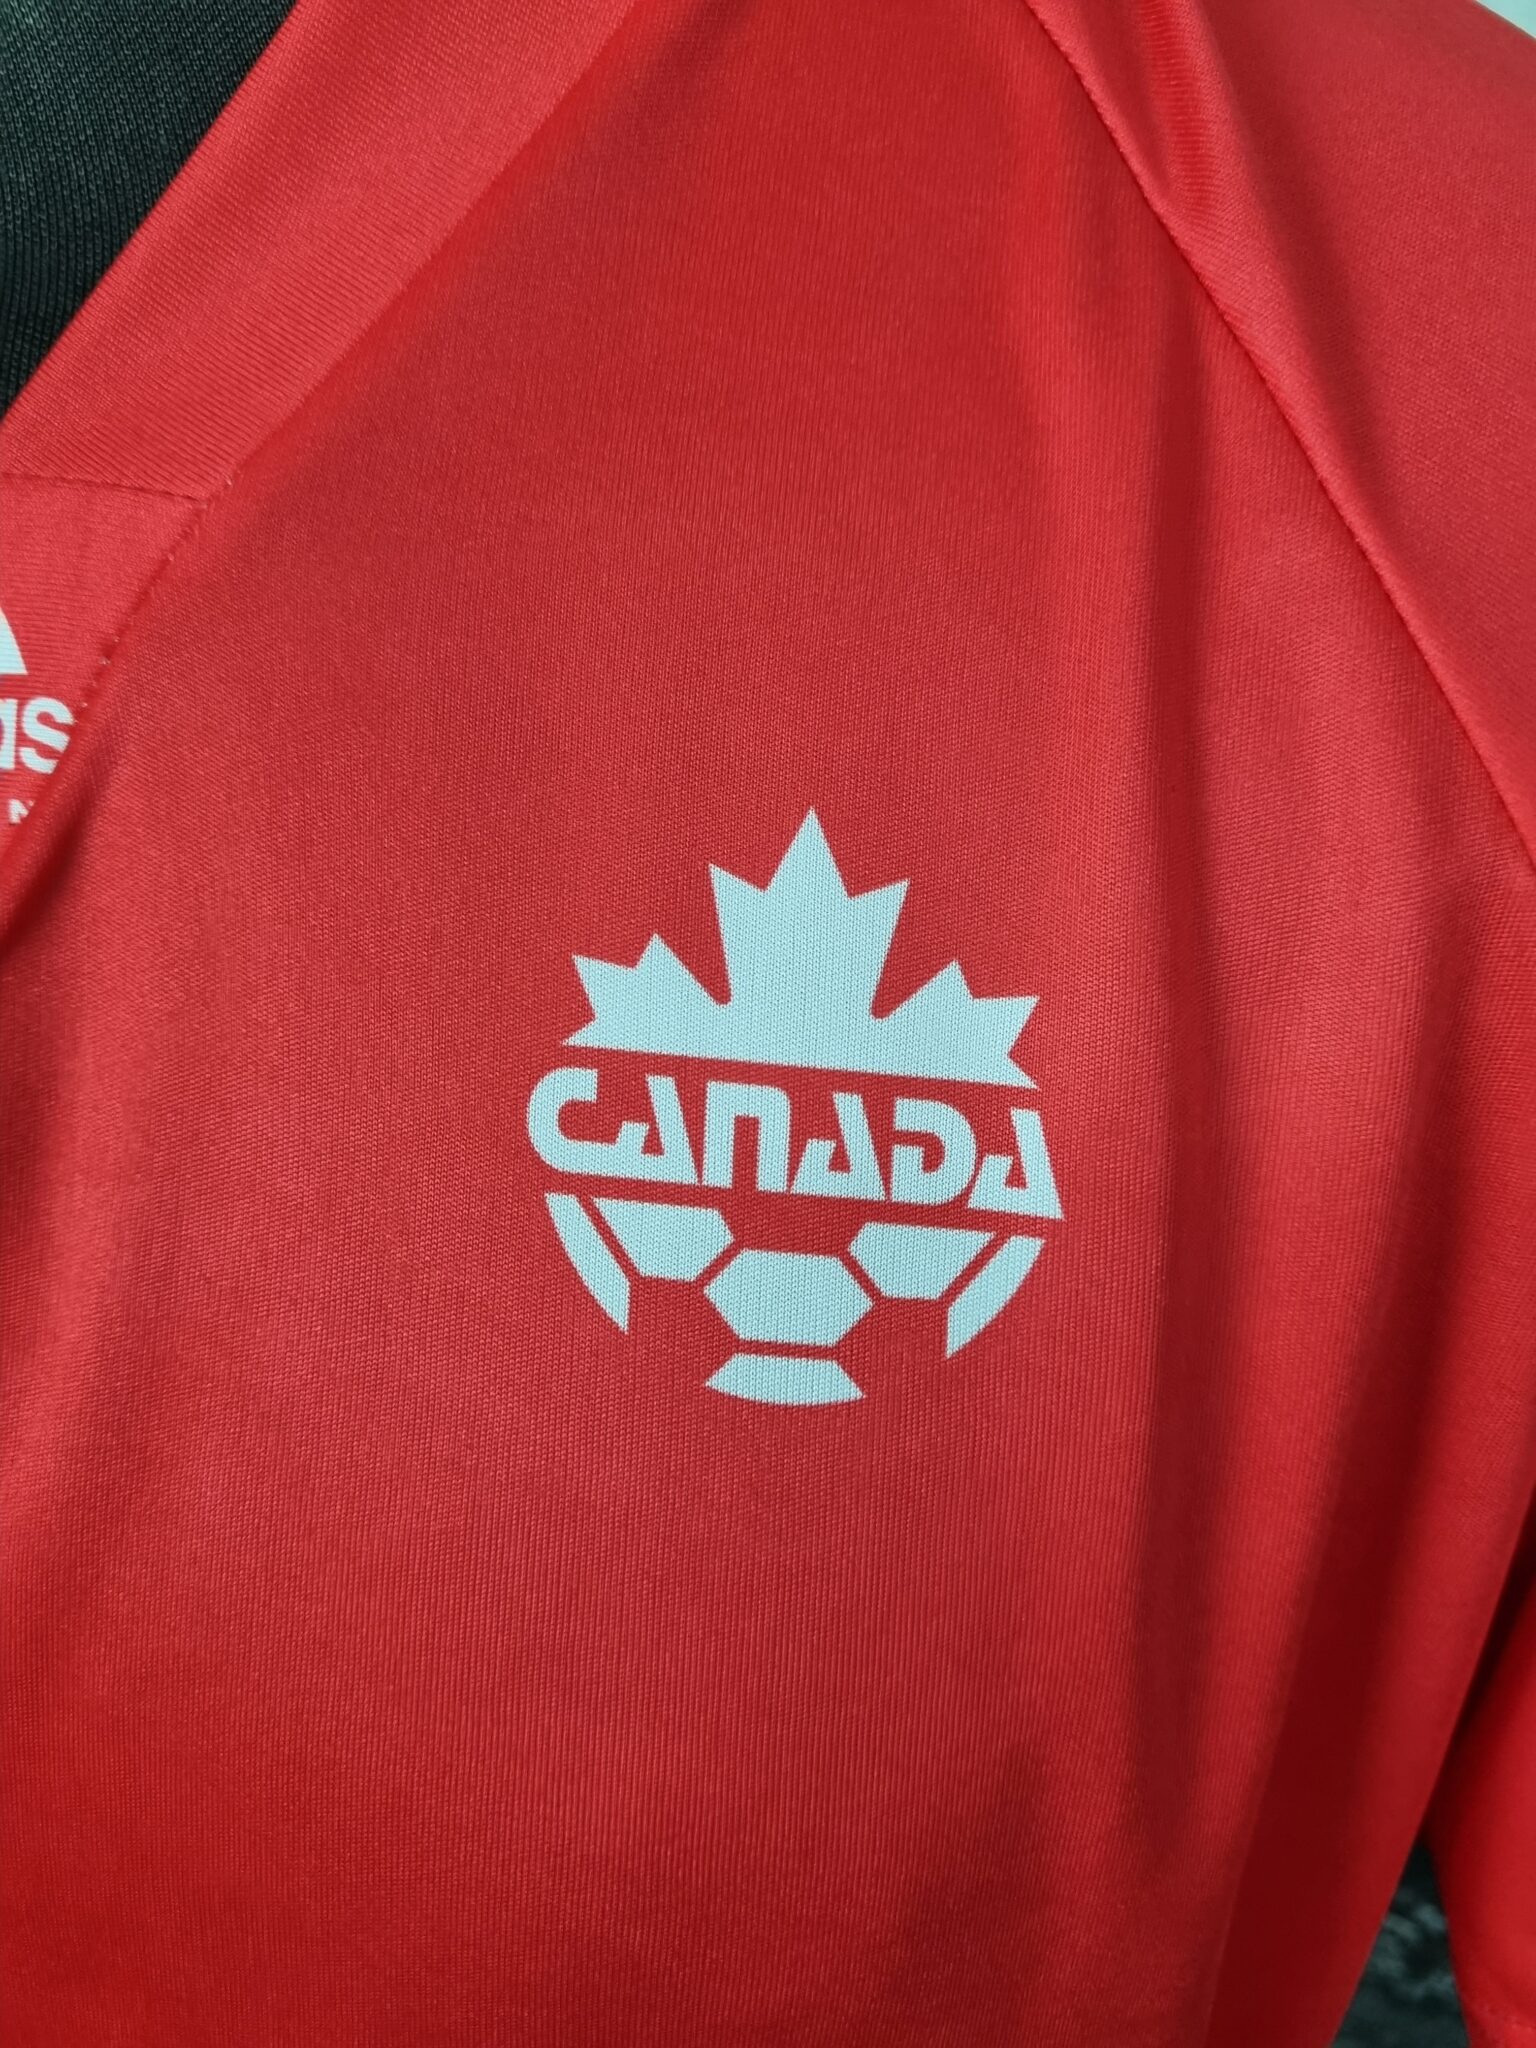 Canada Home Football Shirt 1992 Retro Jersey Soccer World Cup 2022 - Sport Club Memories